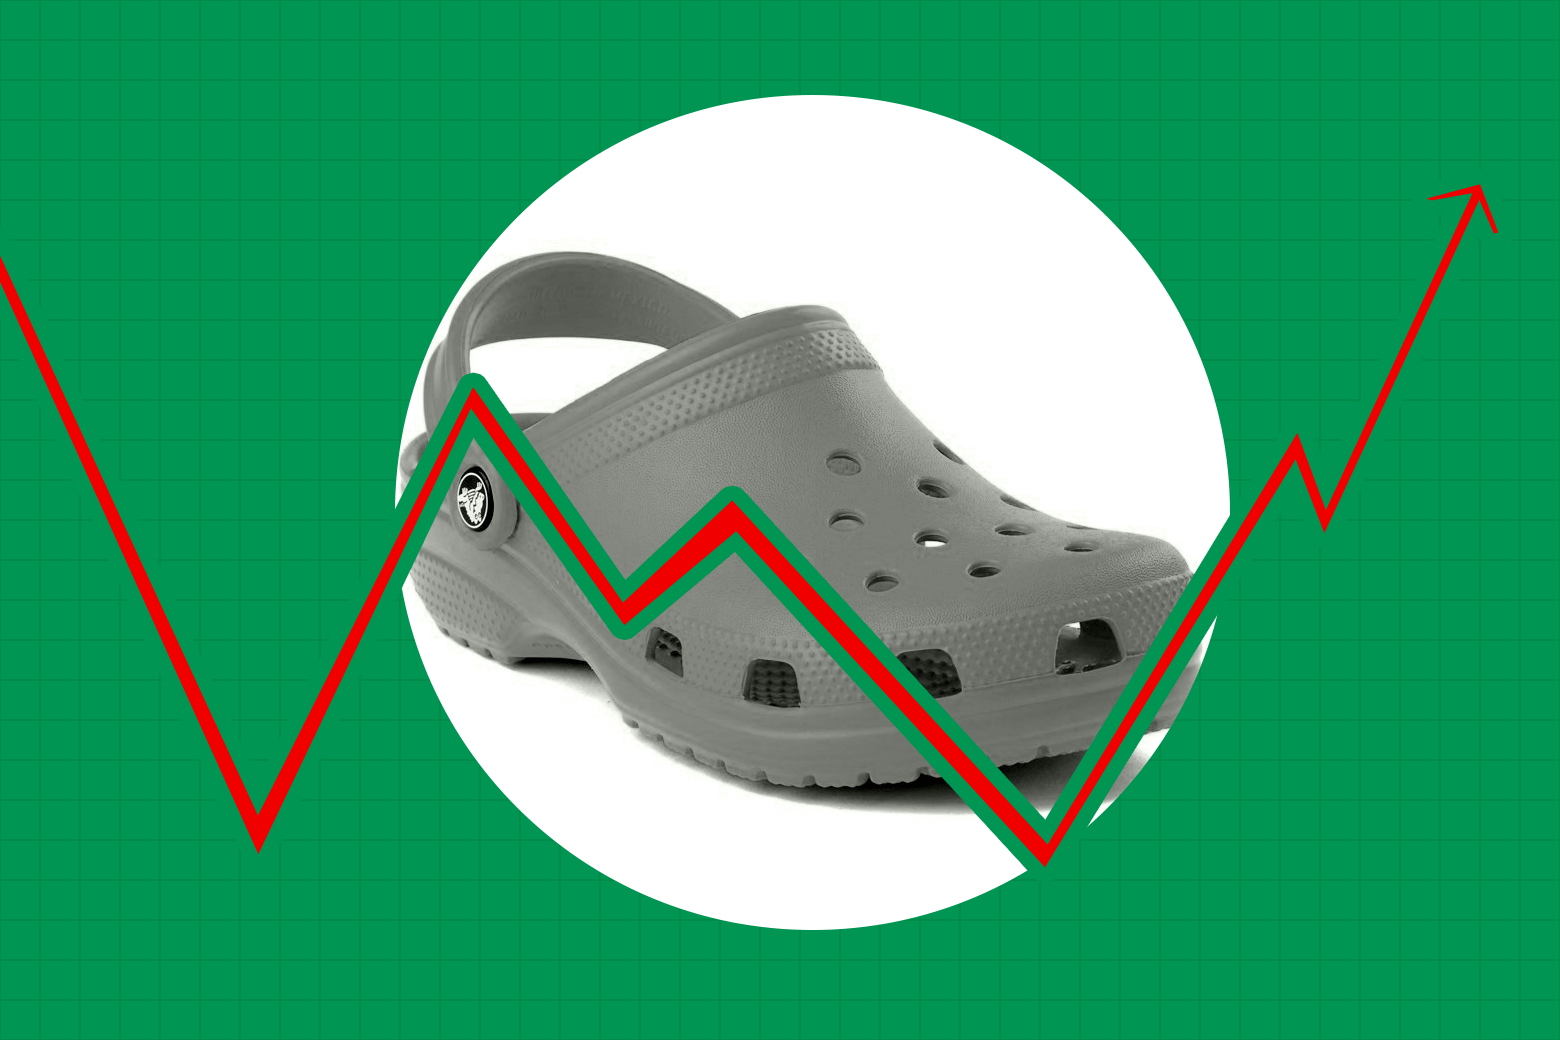 Croc shoe behind an arrow showing stock market fluctuation